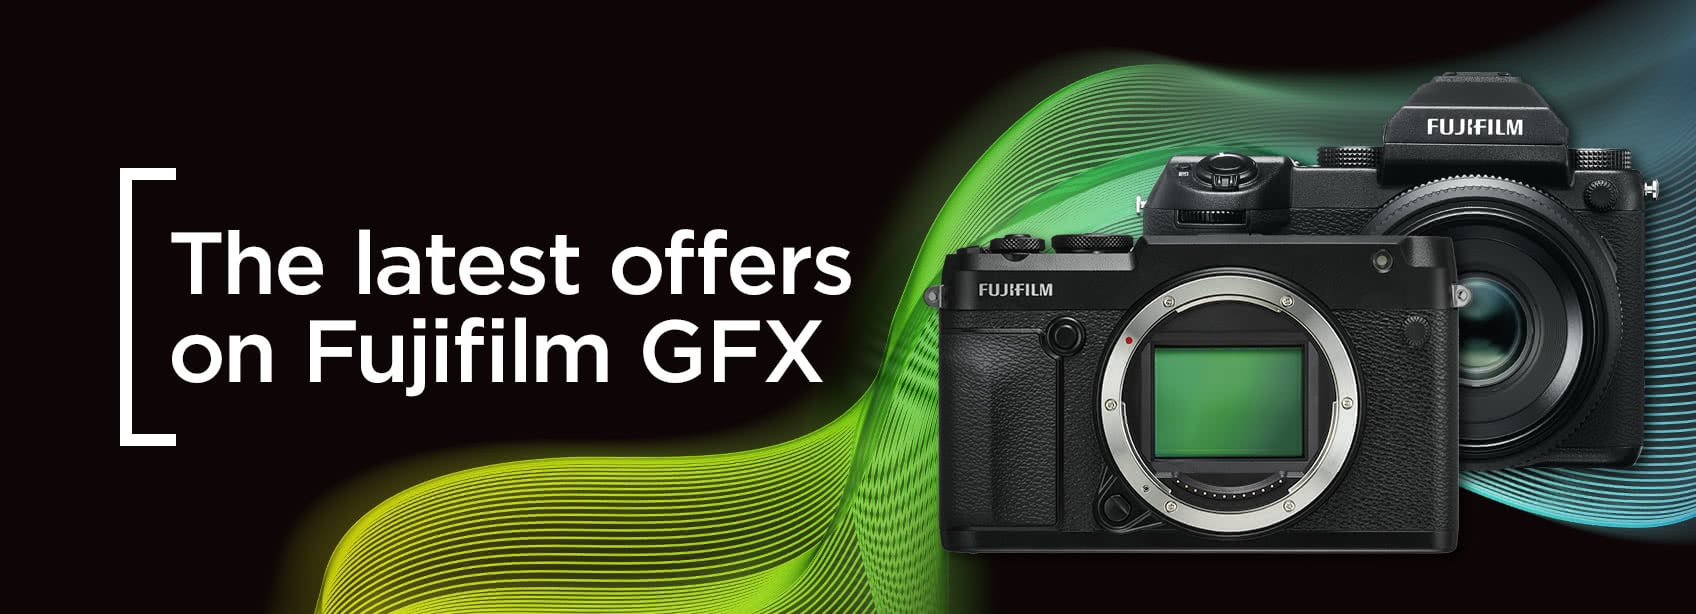 wex-photo-video-Fujifilm-GFX-latest-offers-LPHeader-03.10.19.jpg